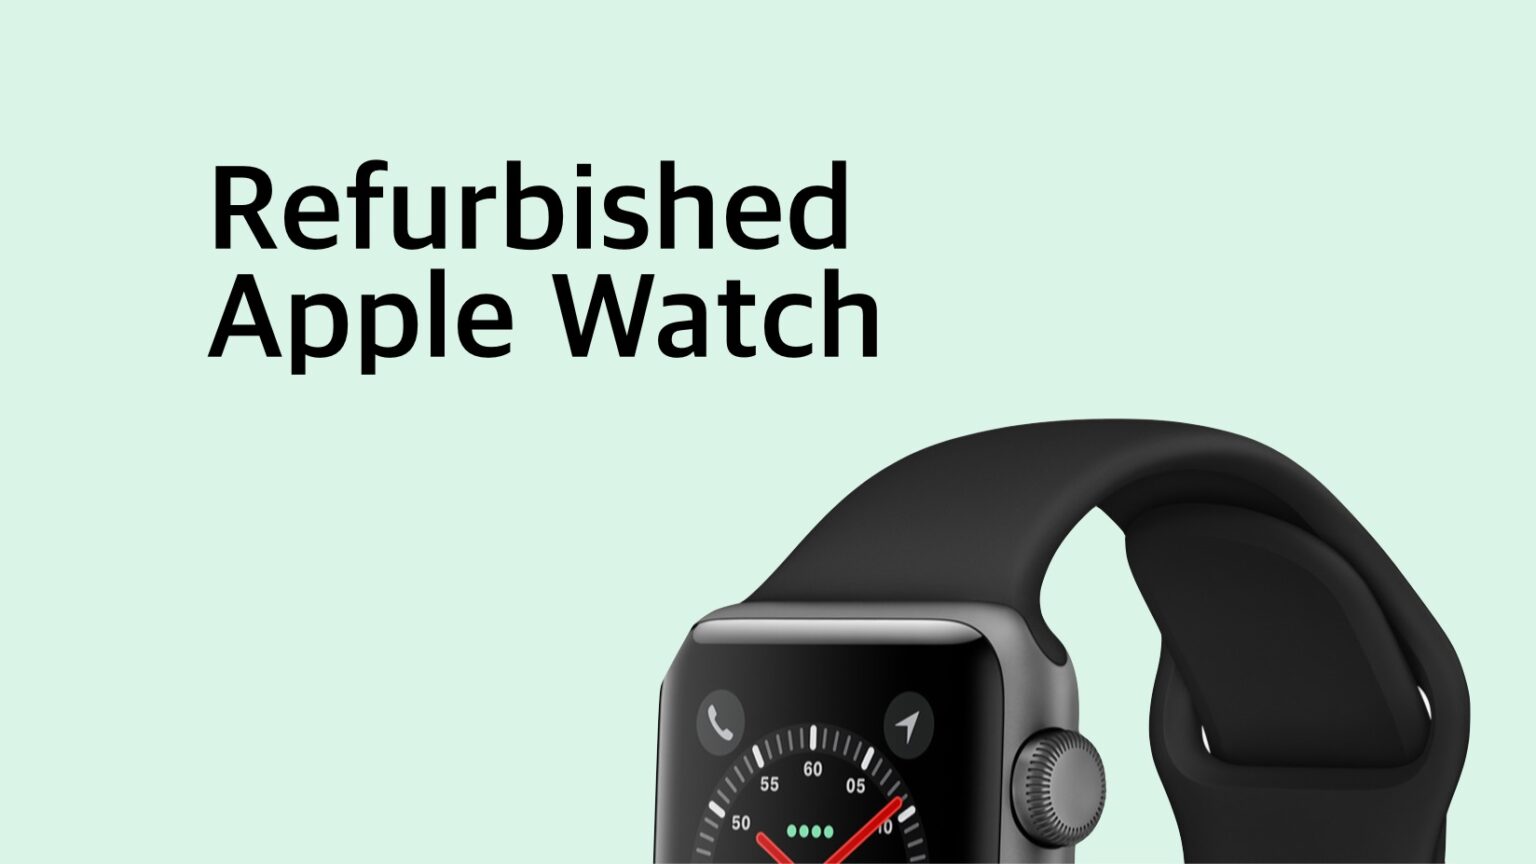 Save big on Apple Watch refurbished units